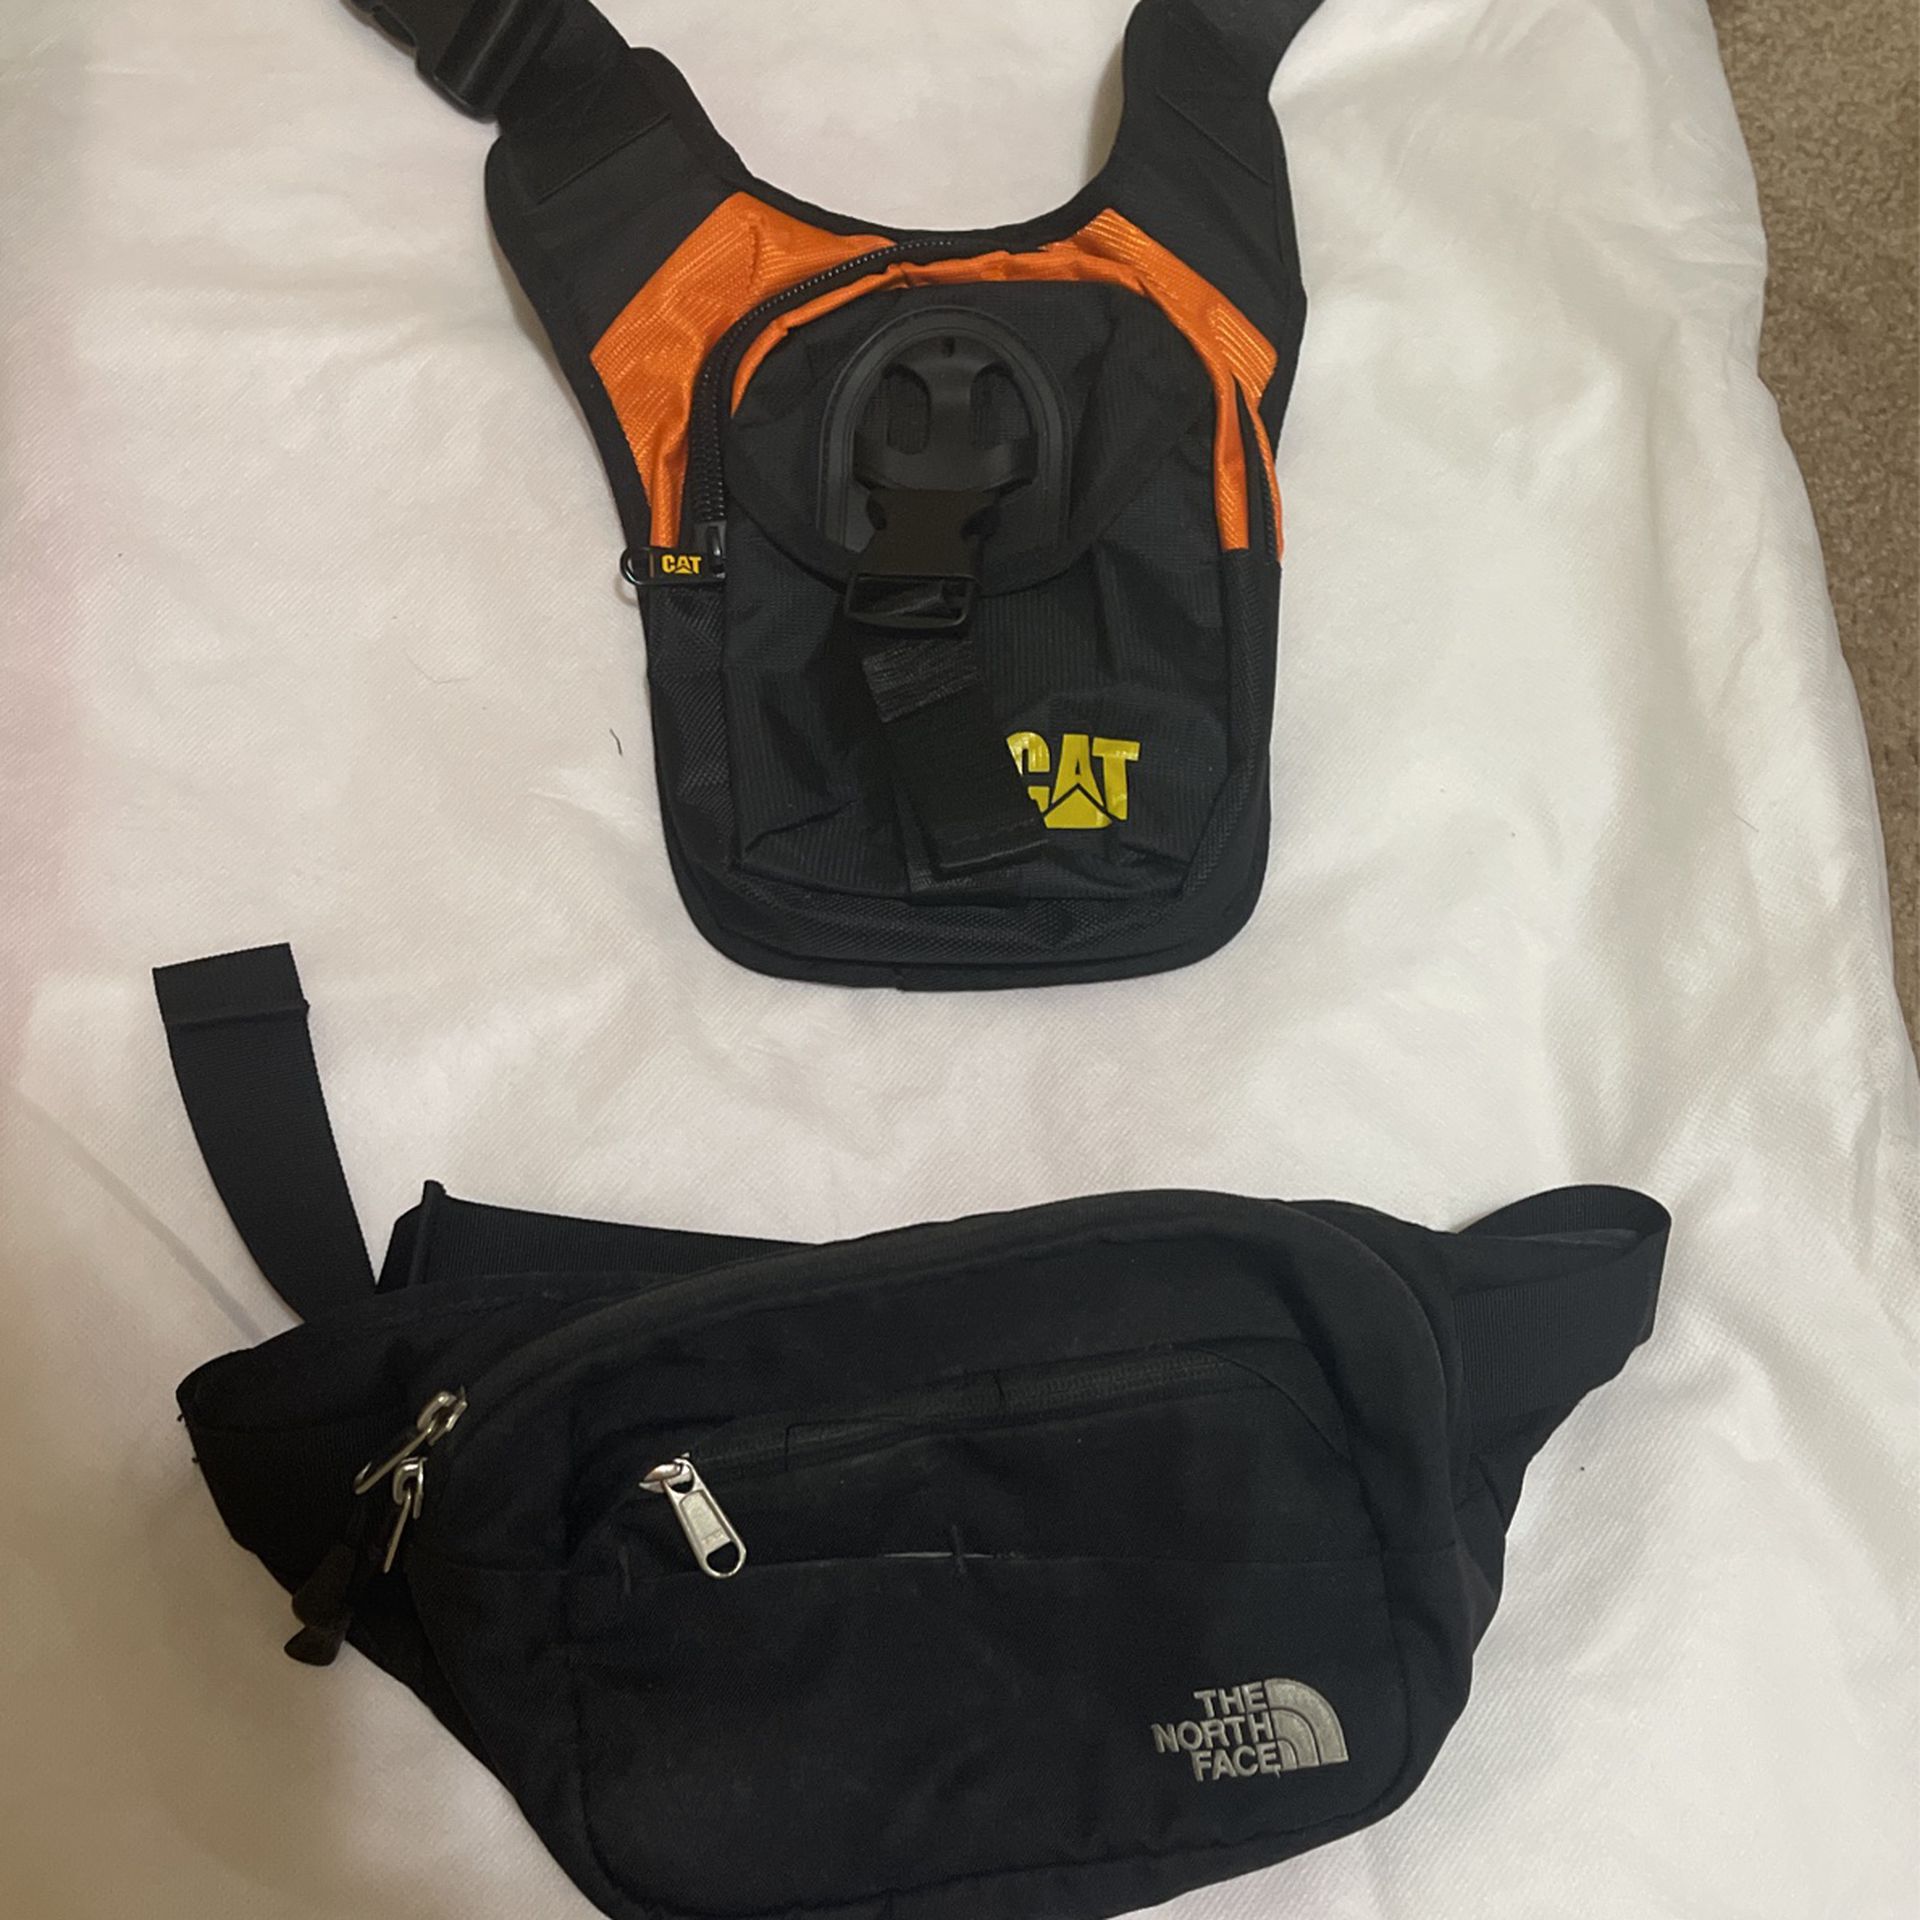 North Face, CATERPILLAR CAT, Etc… Funny Pack /belt Bag